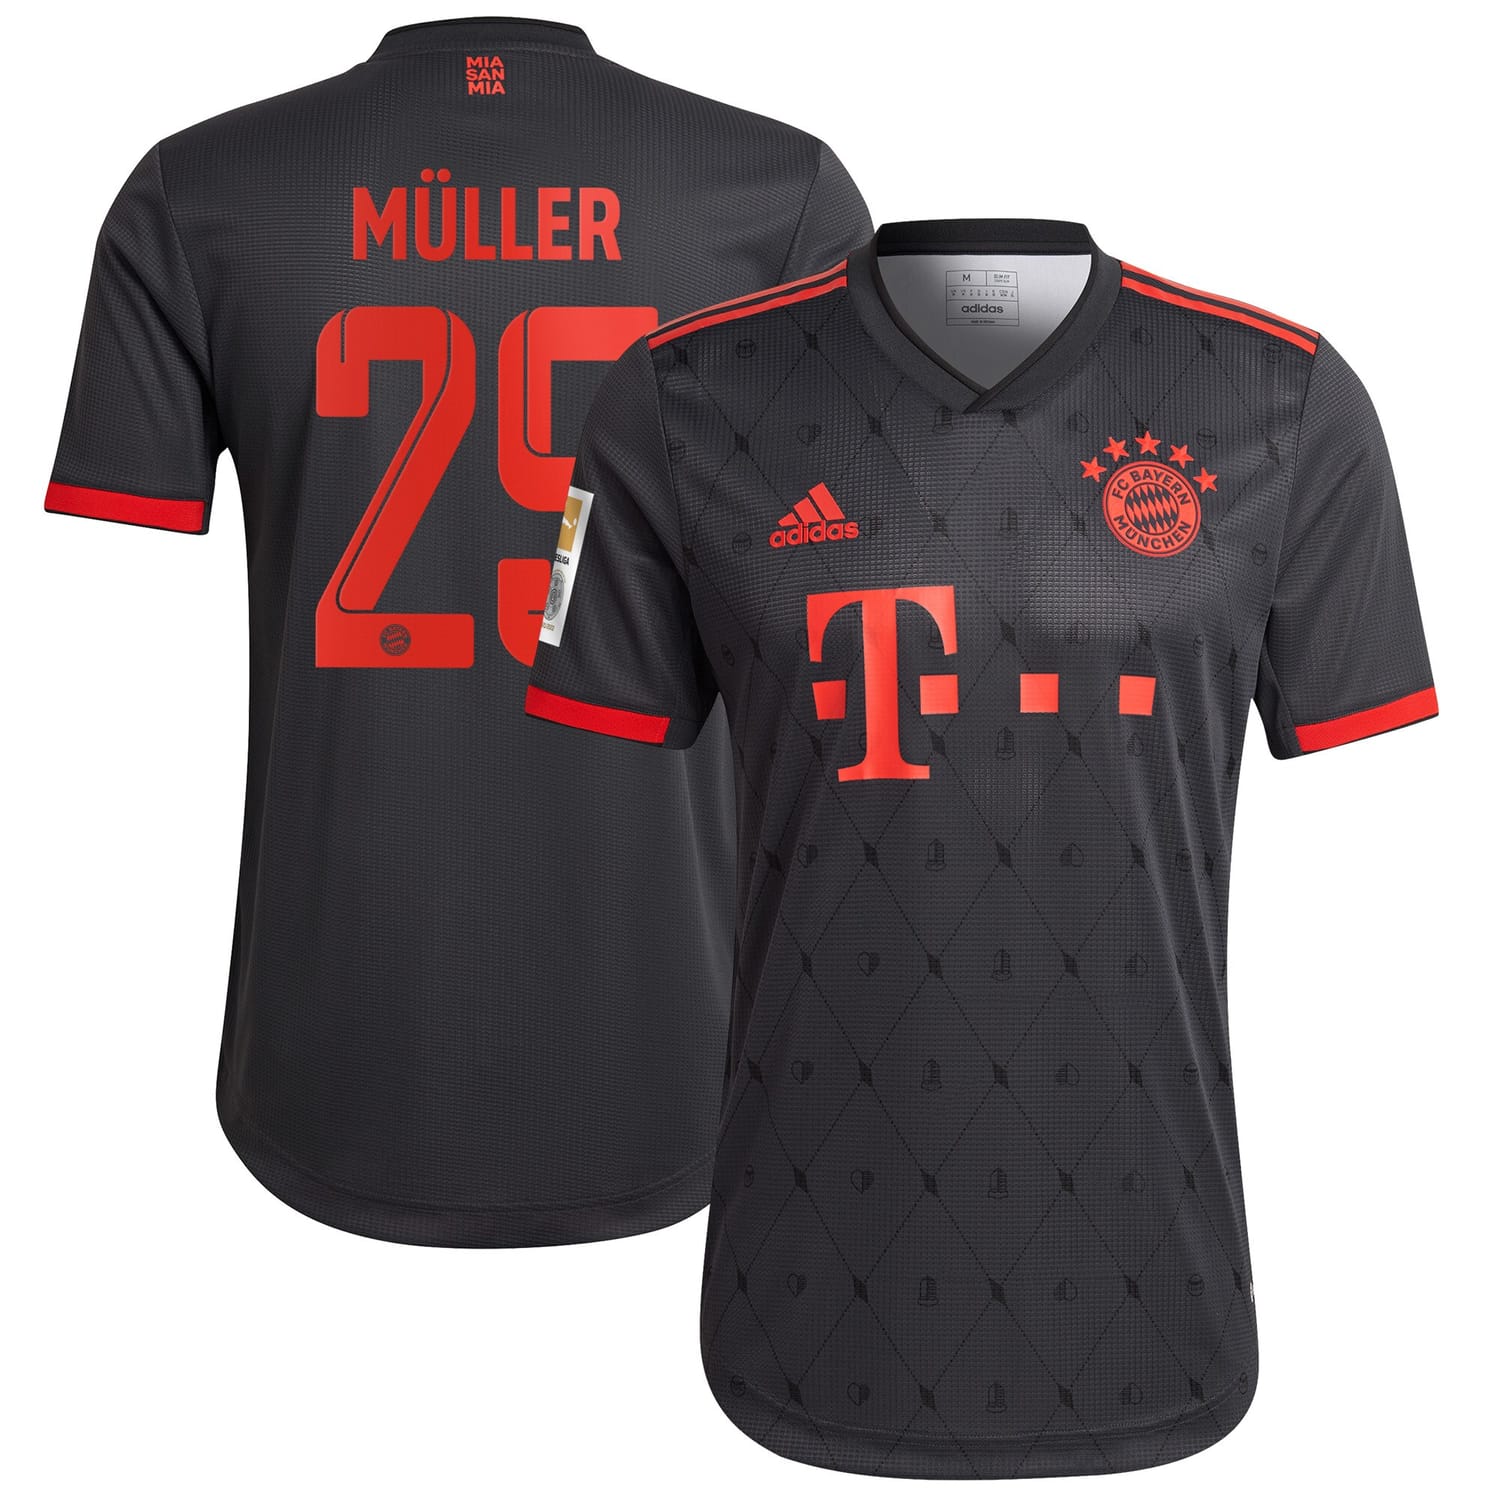 Bundesliga Bayern Munich Third Authentic Jersey Shirt Charcoal 2022-23 player Thomas Müller printing for Men